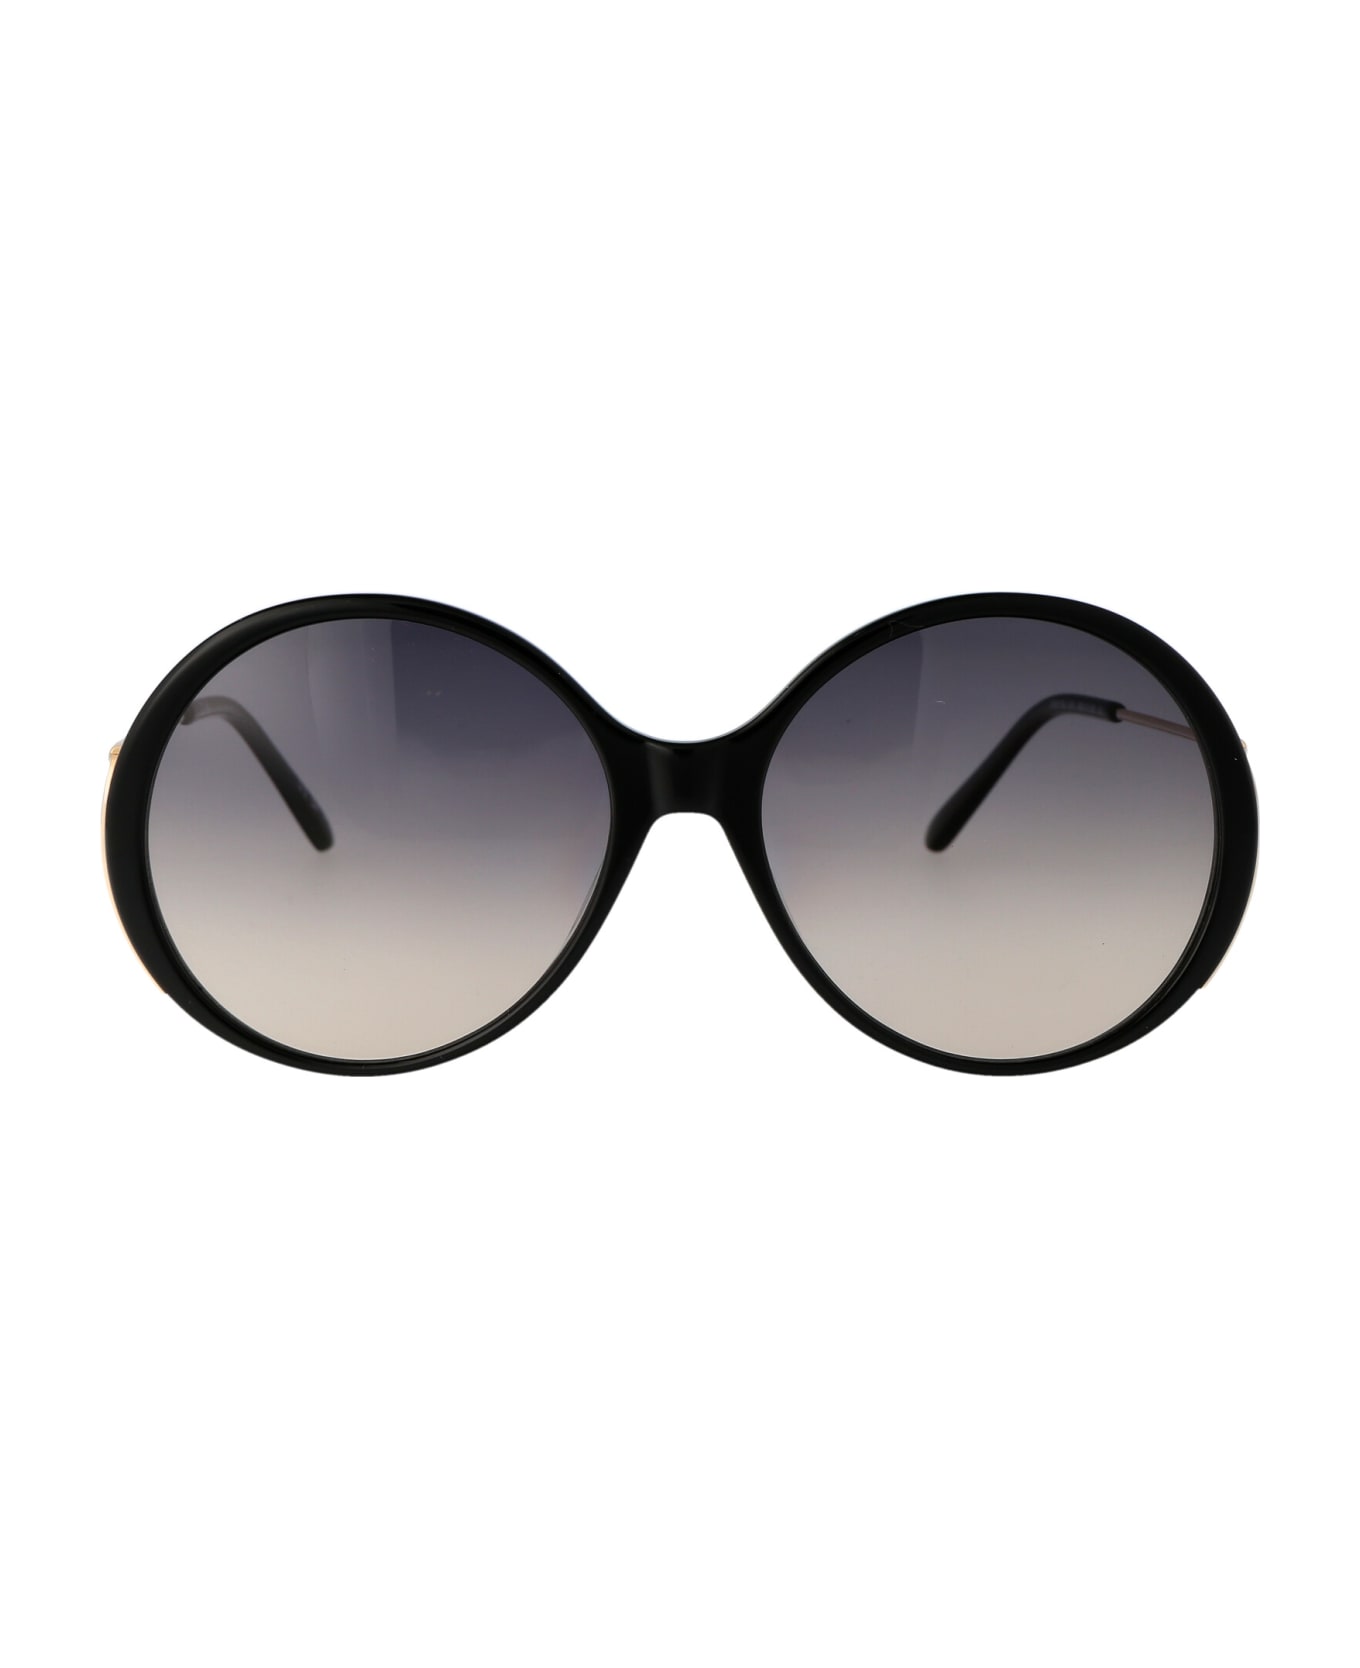 Chloé Eyewear Ch0171s Sunglasses - 001 BLACK GOLD GREY サングラス